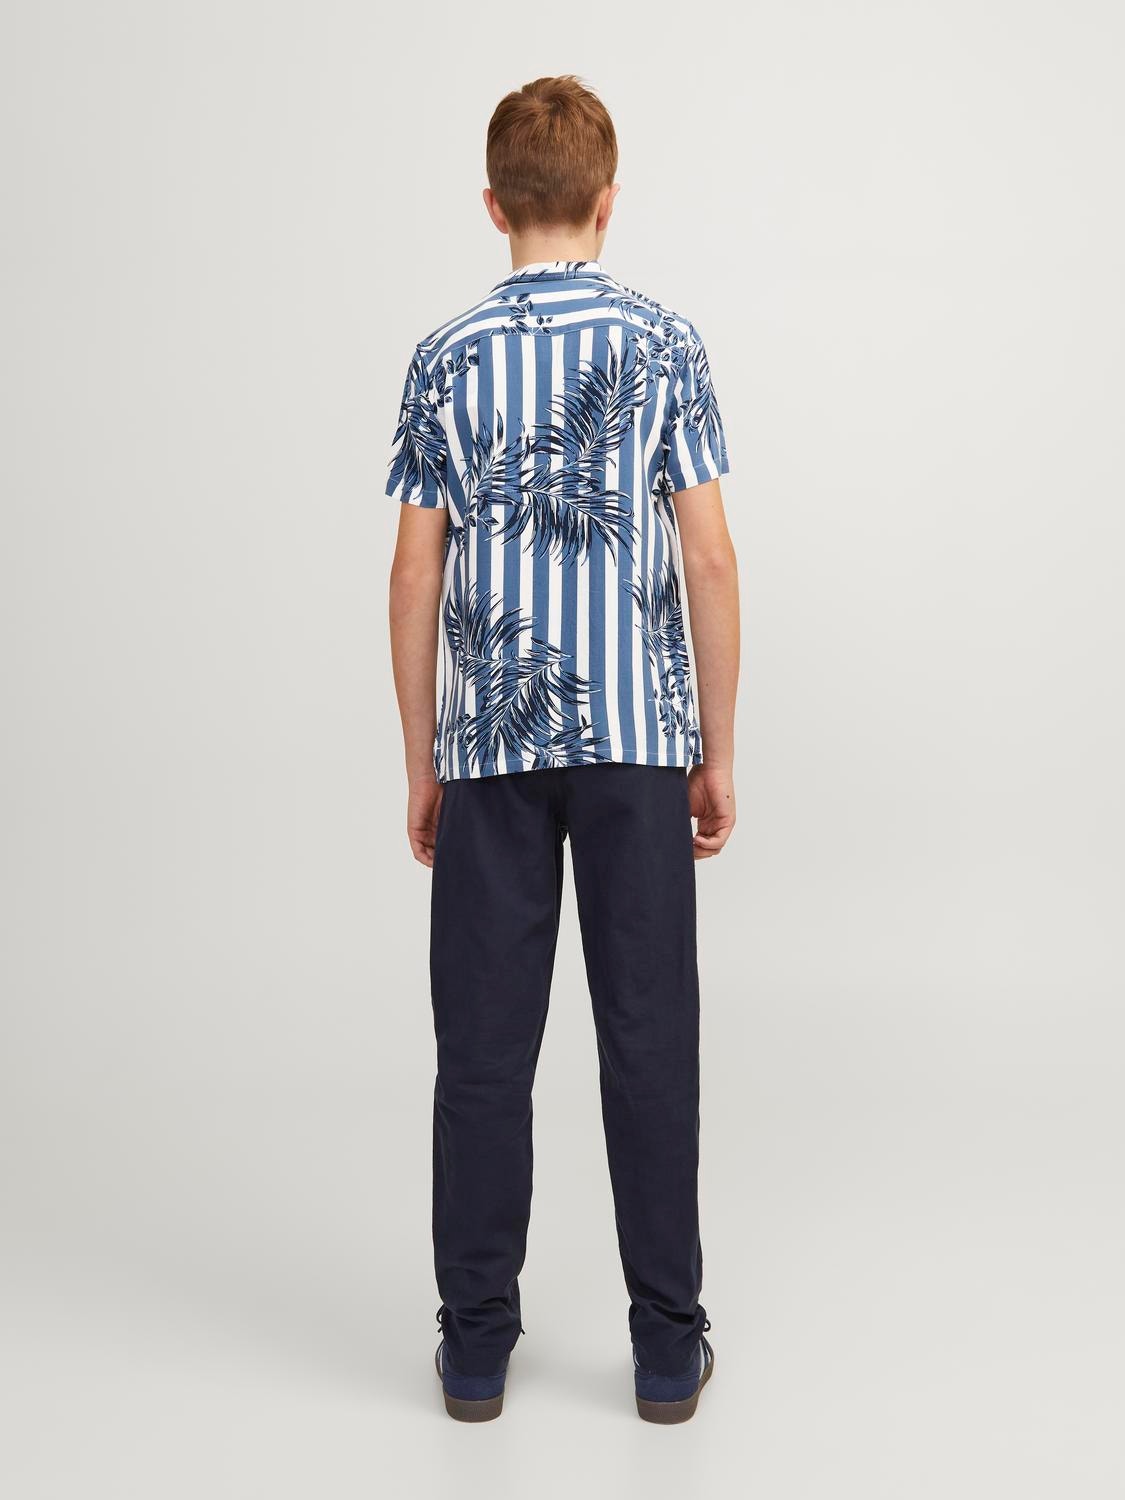 Jack & Jones Marškiniai For boys -Ensign Blue - 12248941